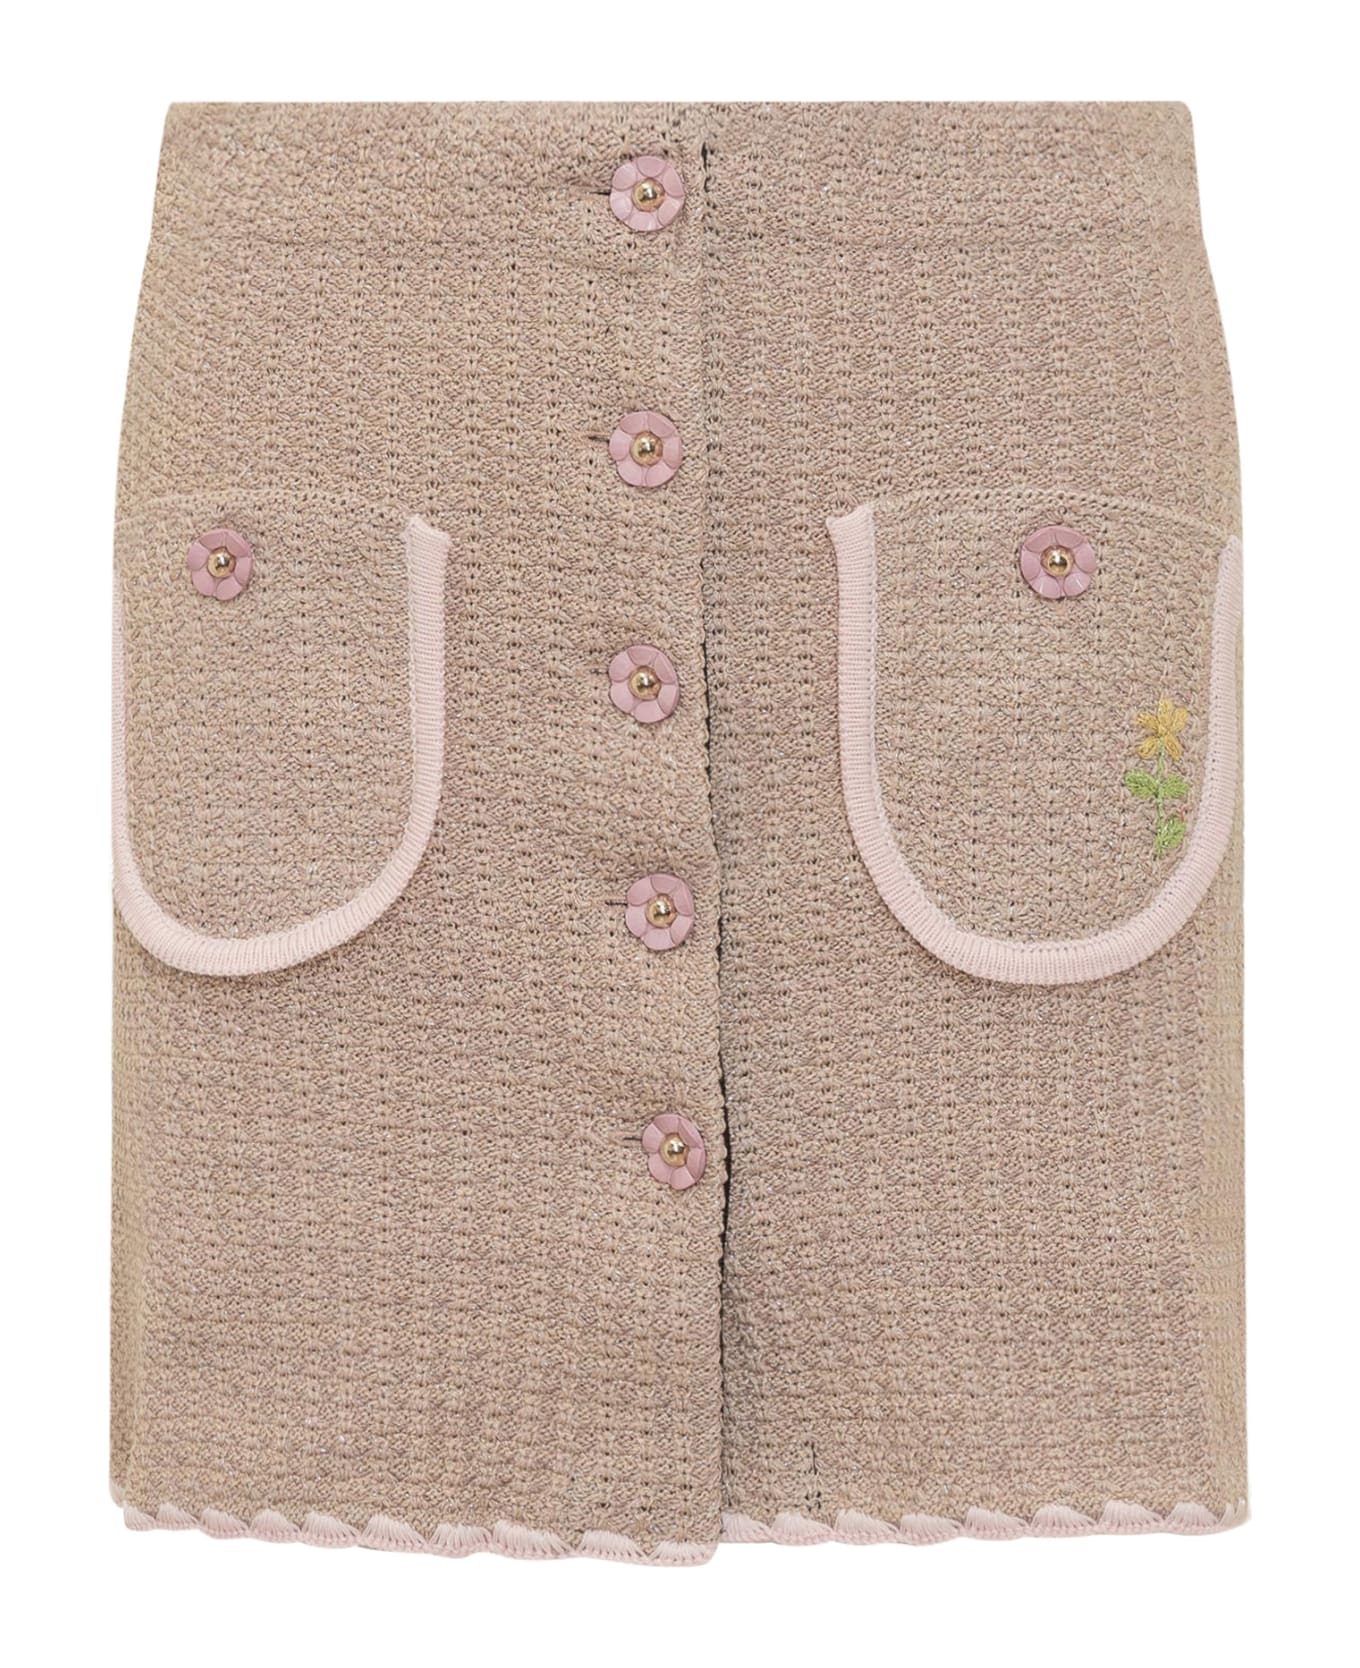 Cormio Knitted Skirt - BEIGE W BABY PINK GLITTER スカート